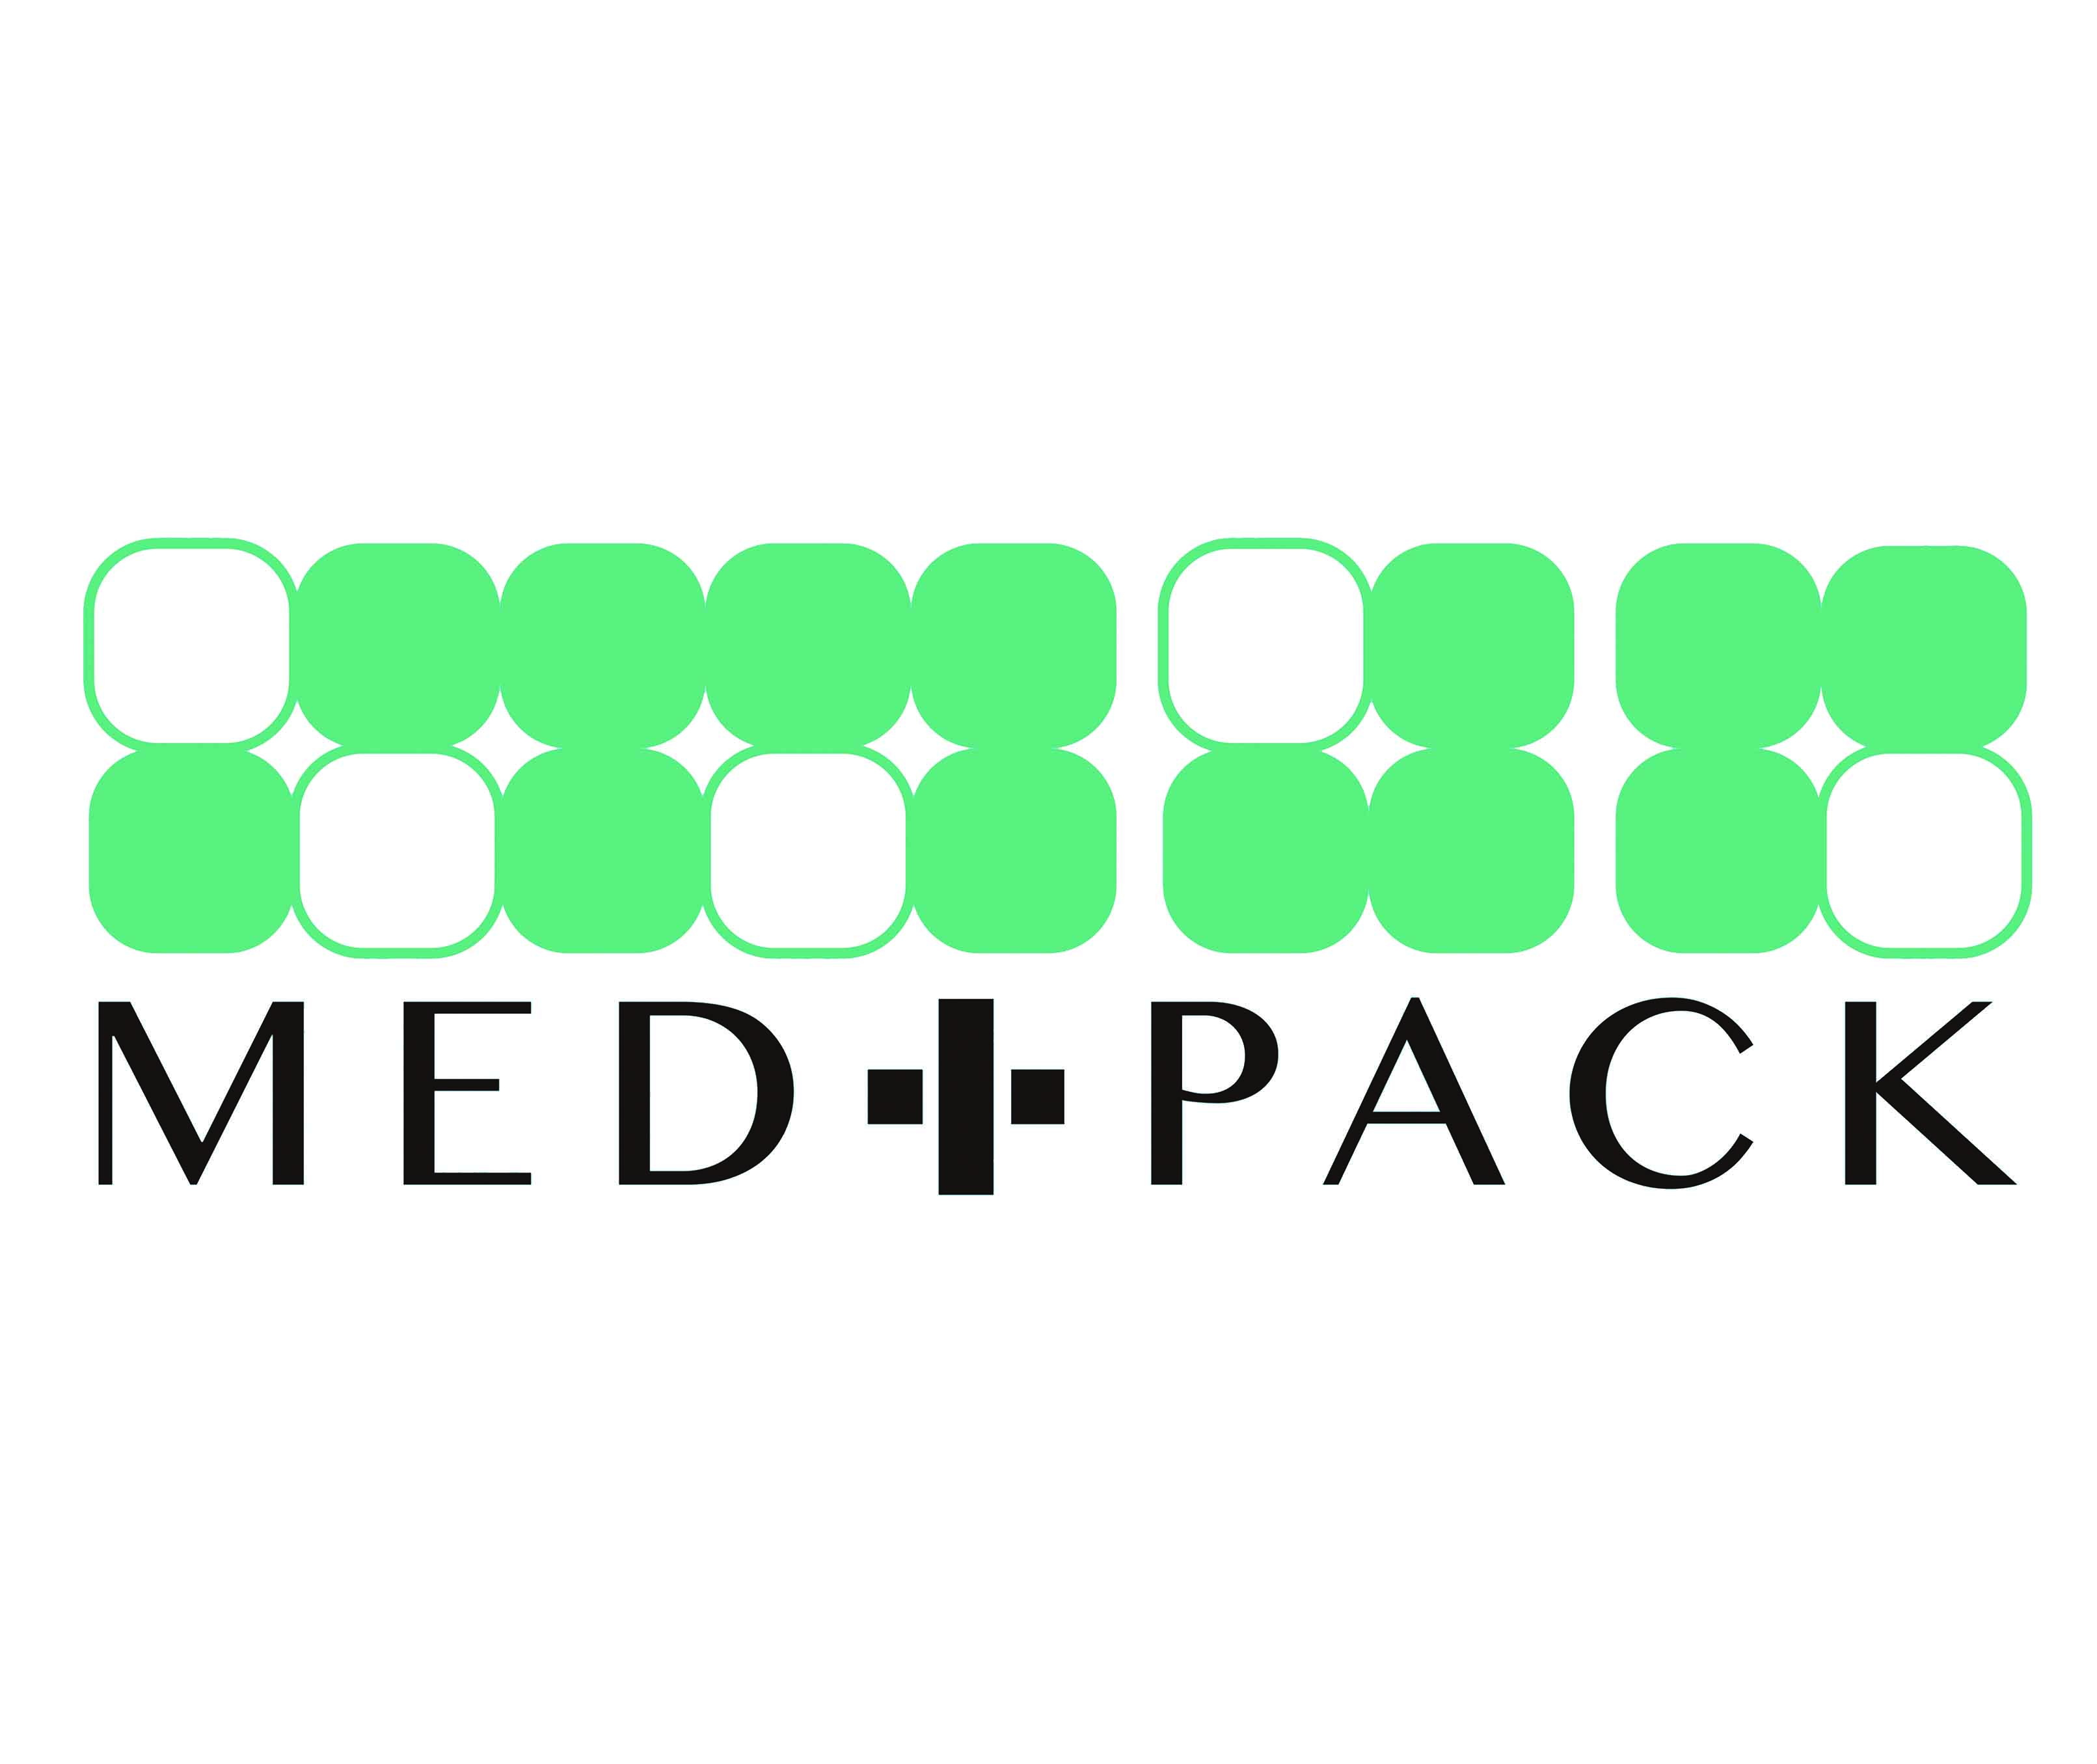 Medipack Medical Packaging Mfg. Co.